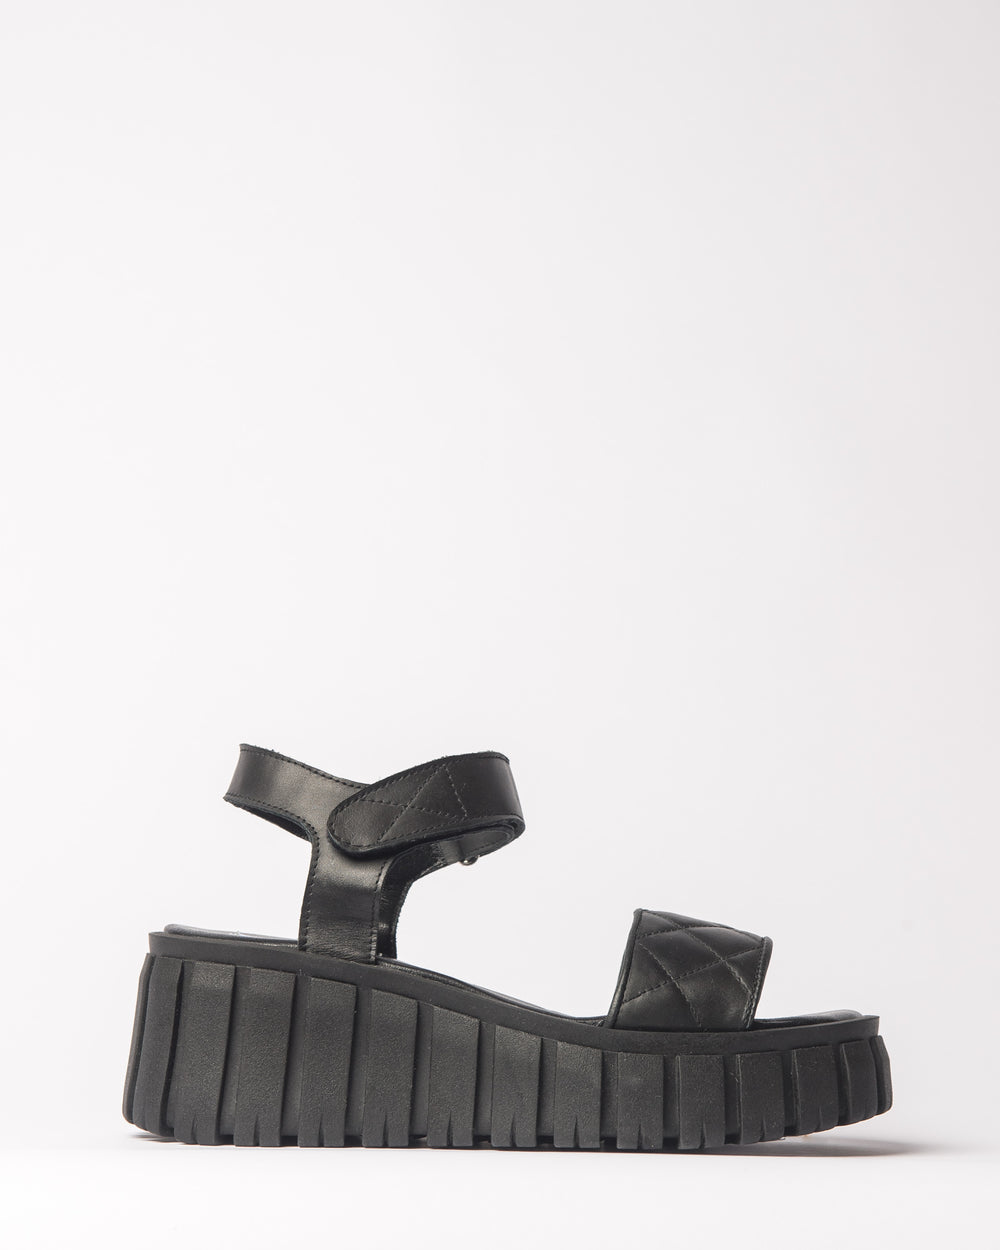 Slogan Sandle - Black Shoes Zoe Kratzmann   